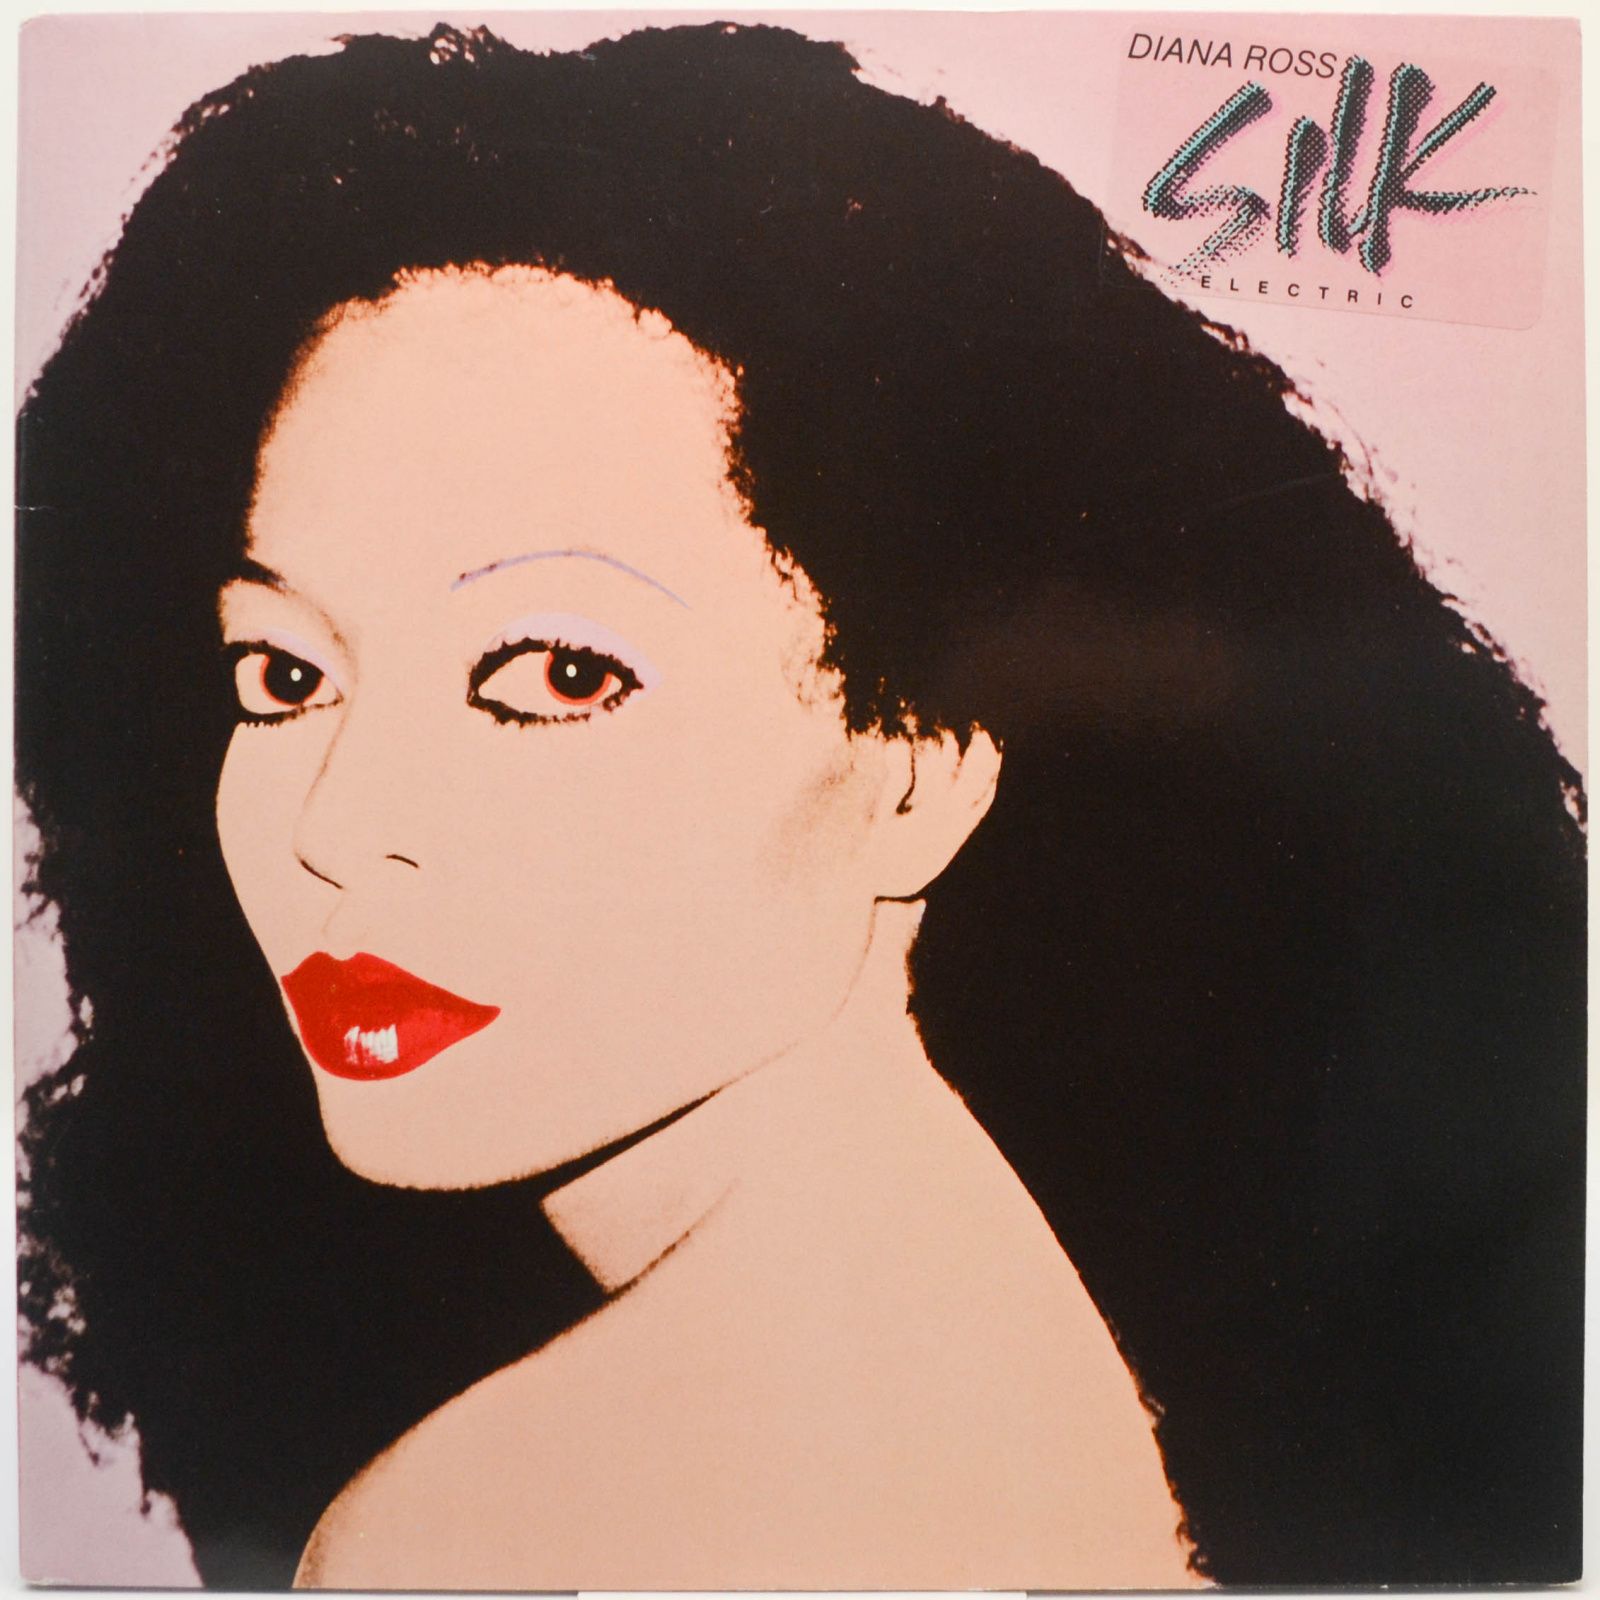 Silk Electric, 1982